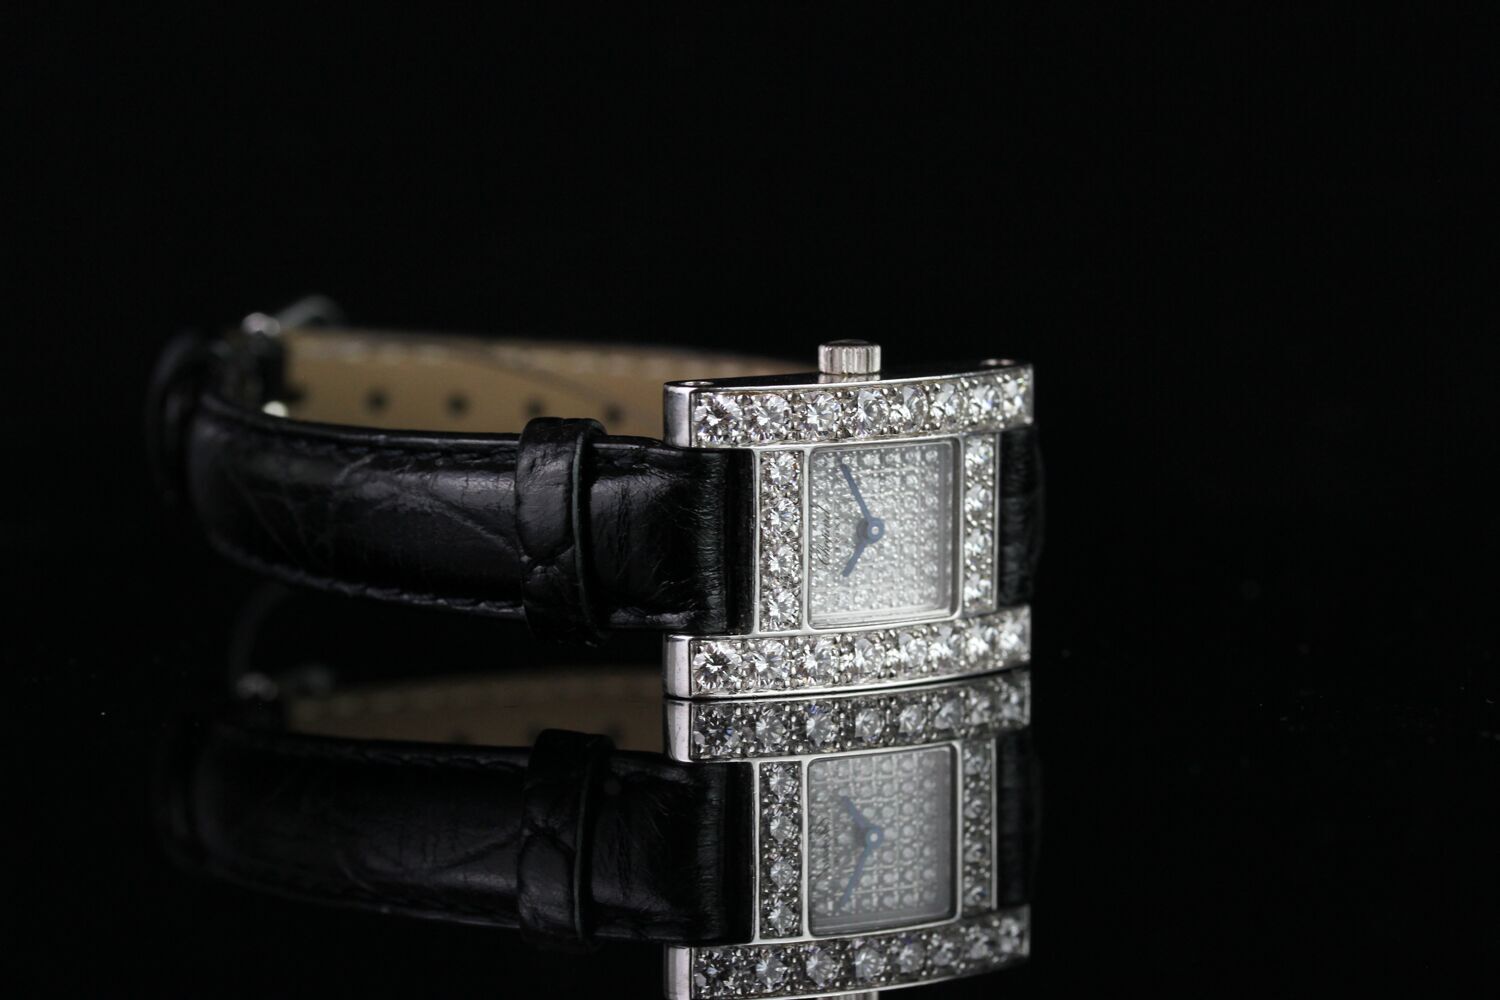 LADIES CHOPARD DIAMOND SET H WRISTWATCH REF 493 1, square pave set diamond dial, diamond set bezel - Image 2 of 4